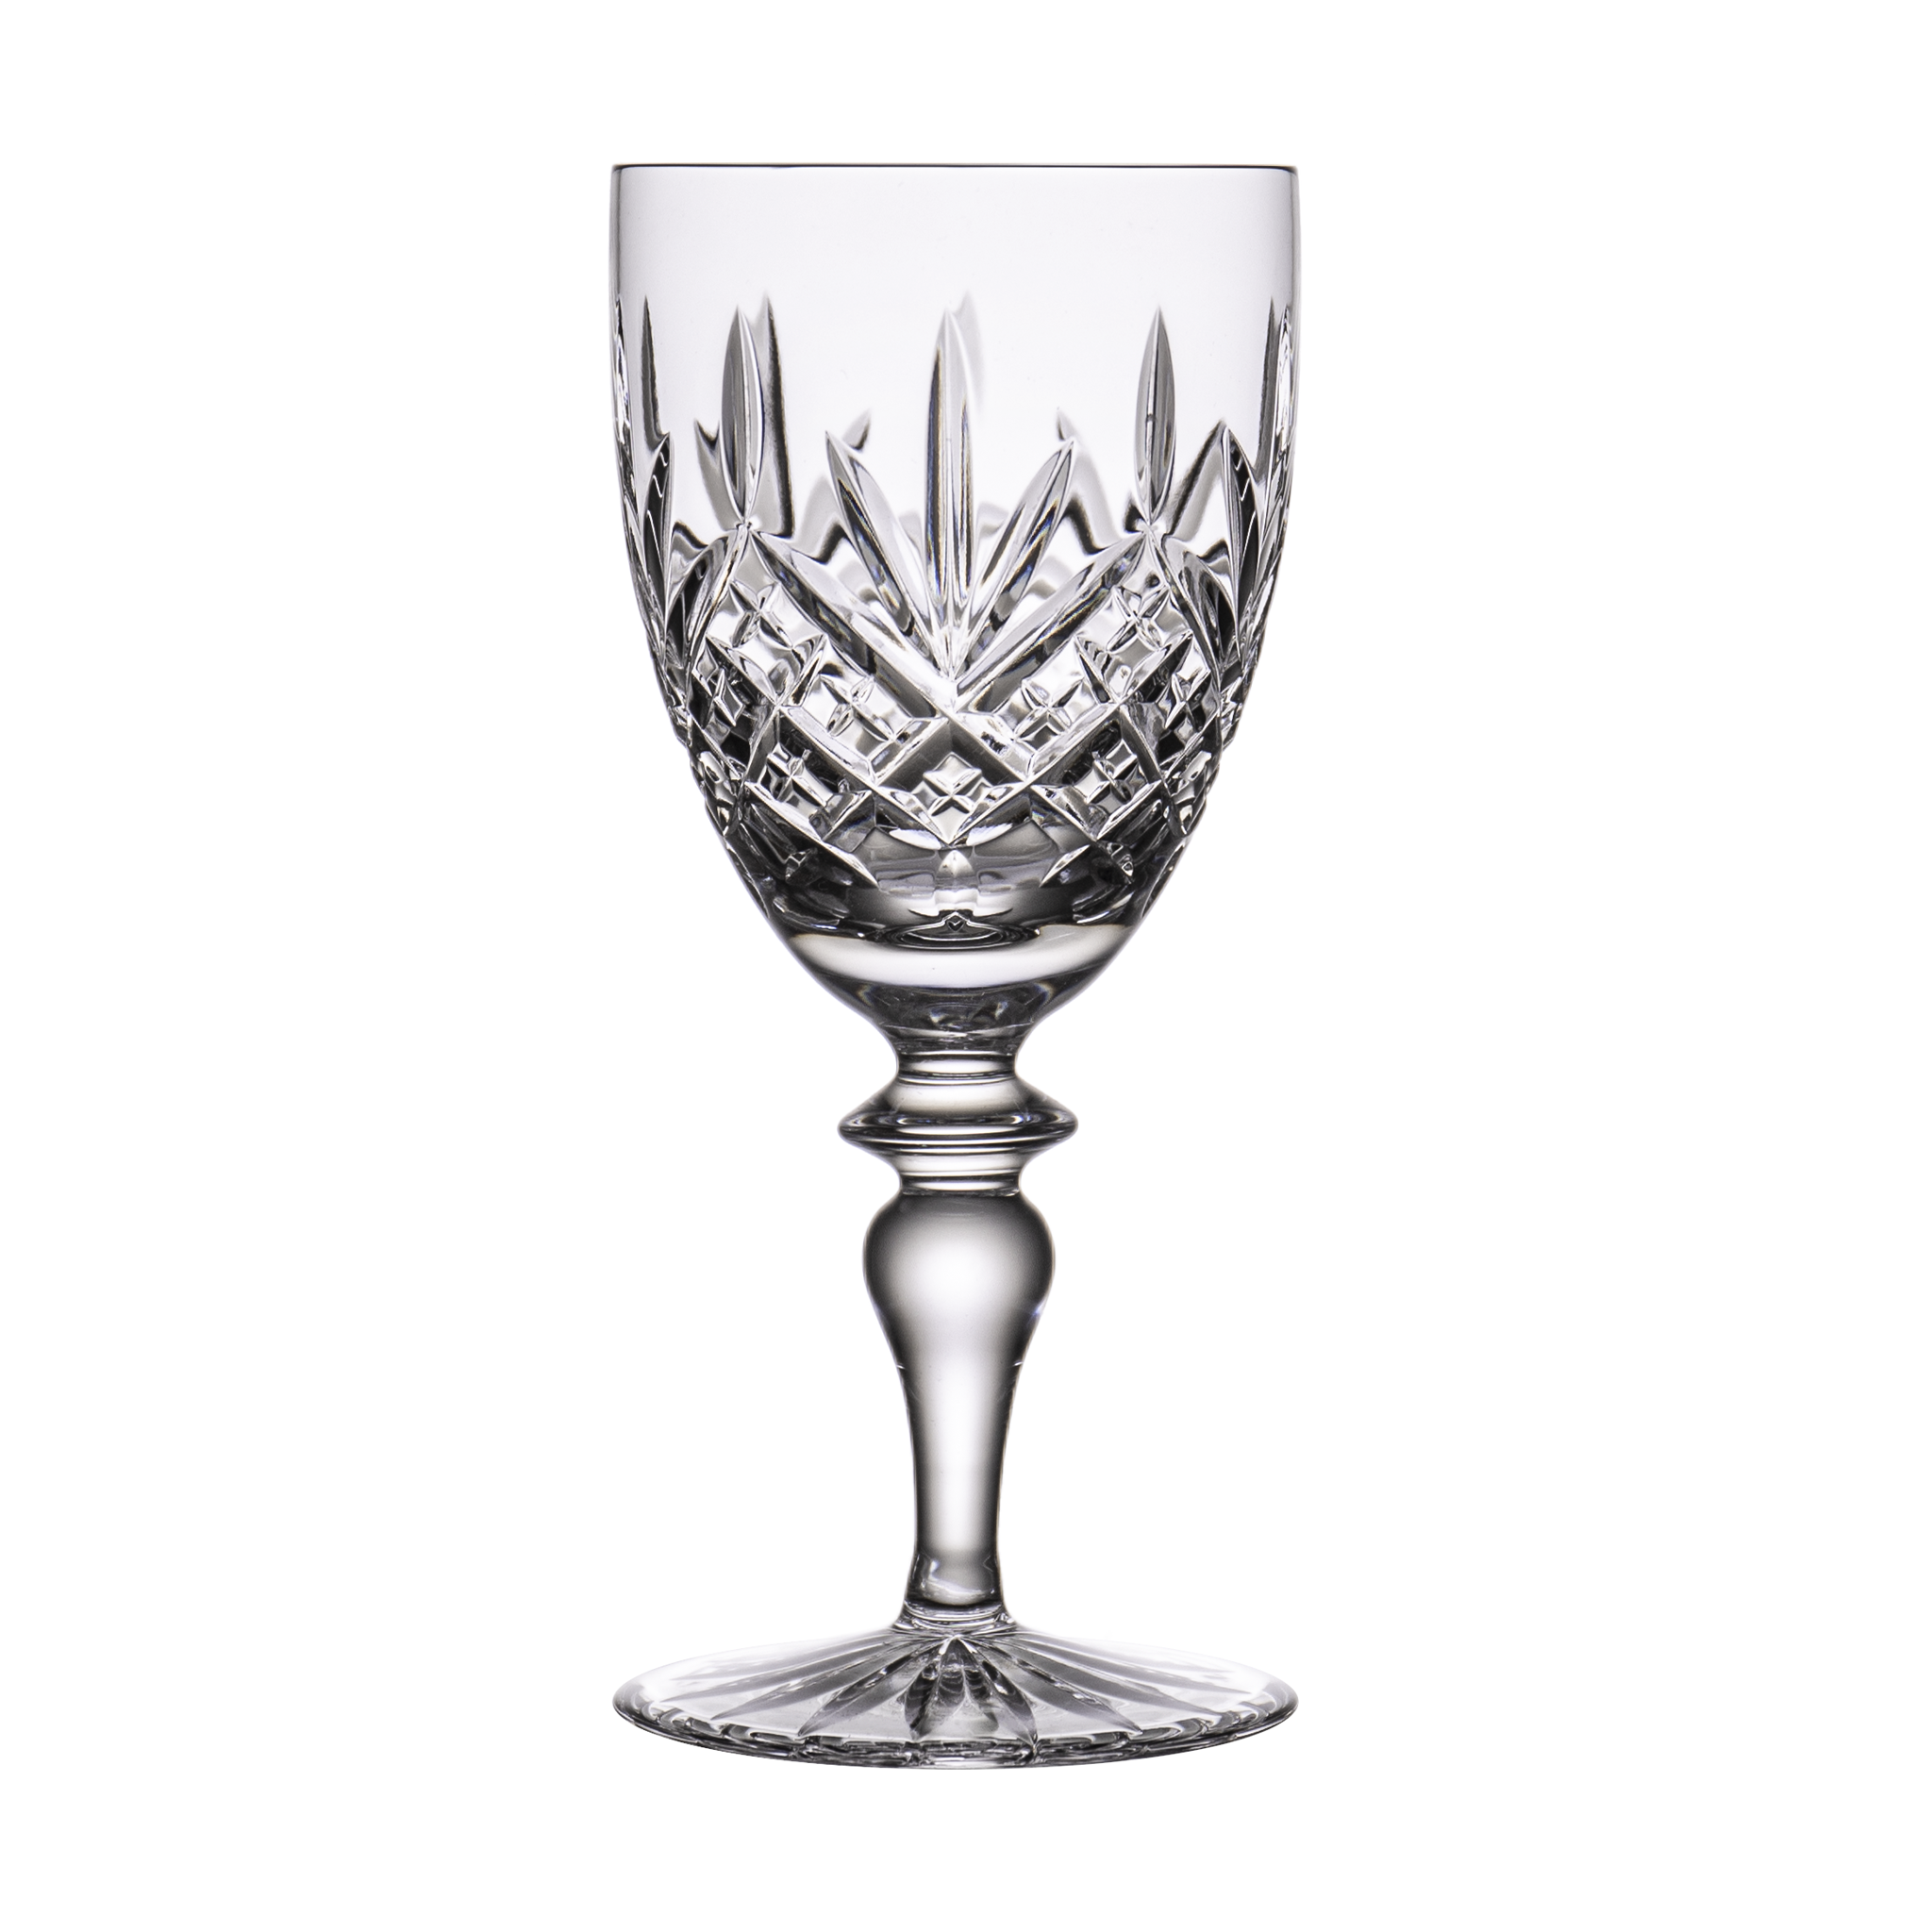 Odessa Green Large Wine Glass 1st Edition - Ajka Crystal